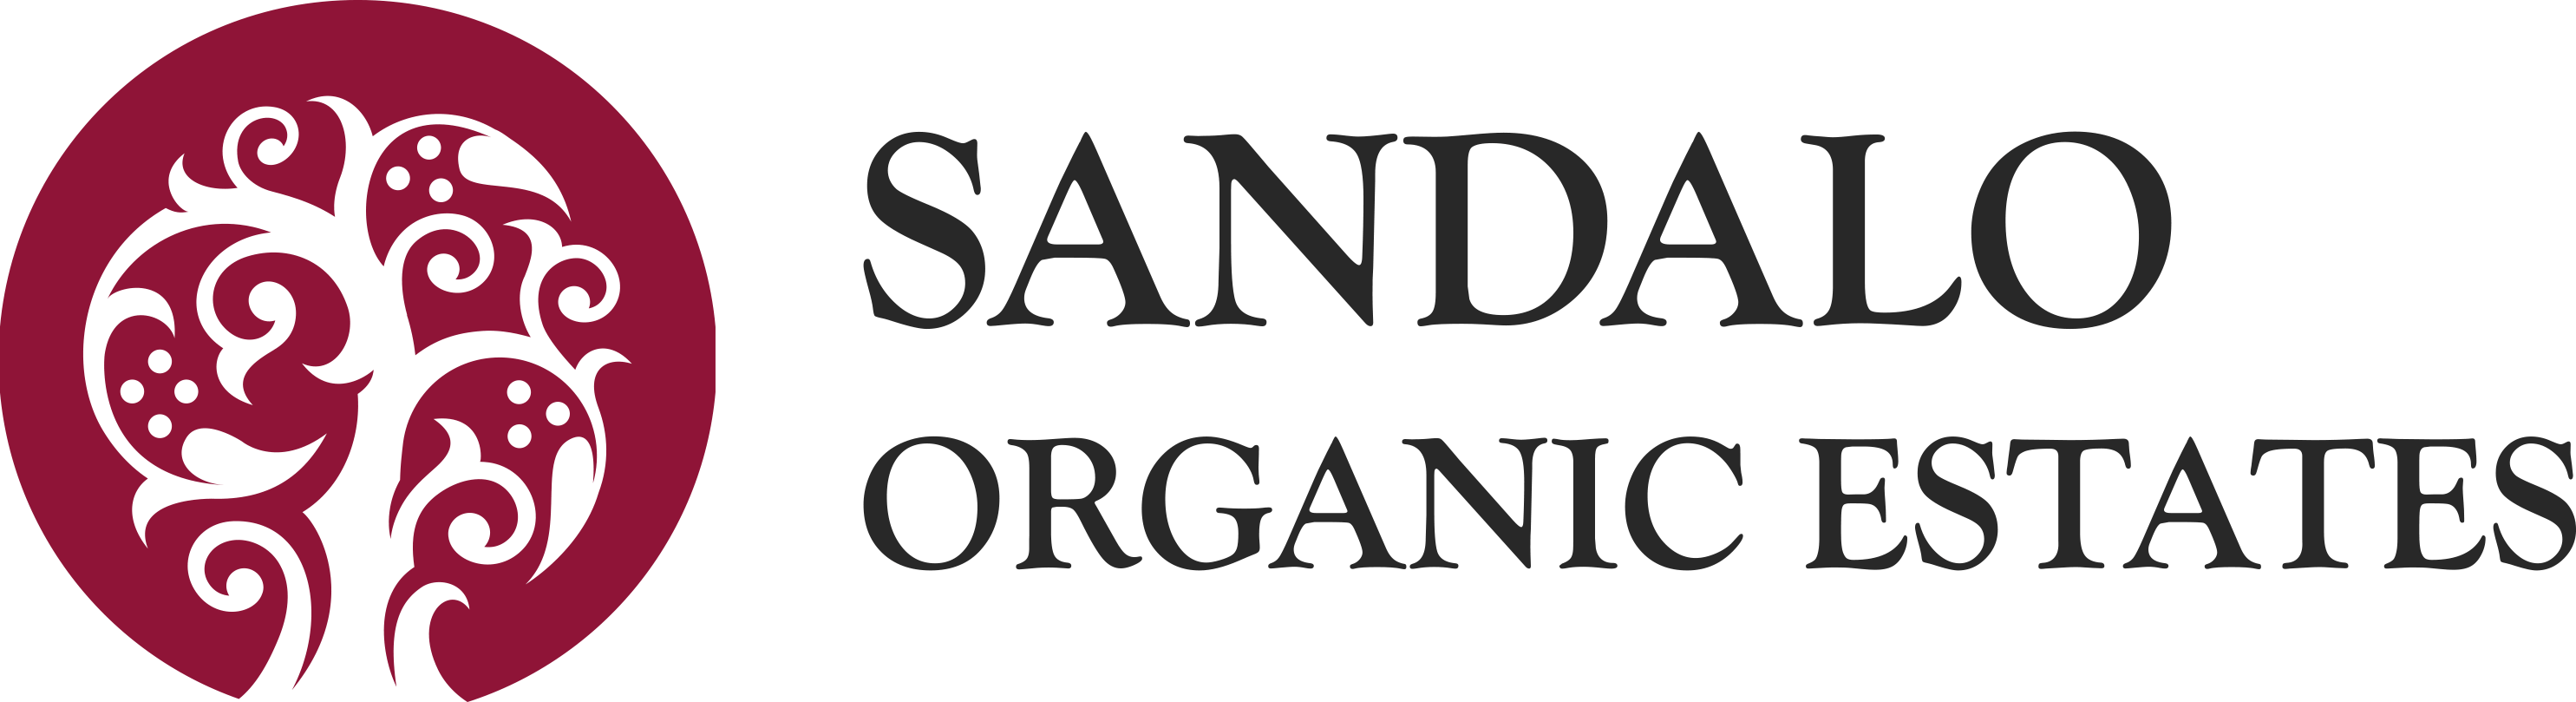 Sandalo Organic Estates